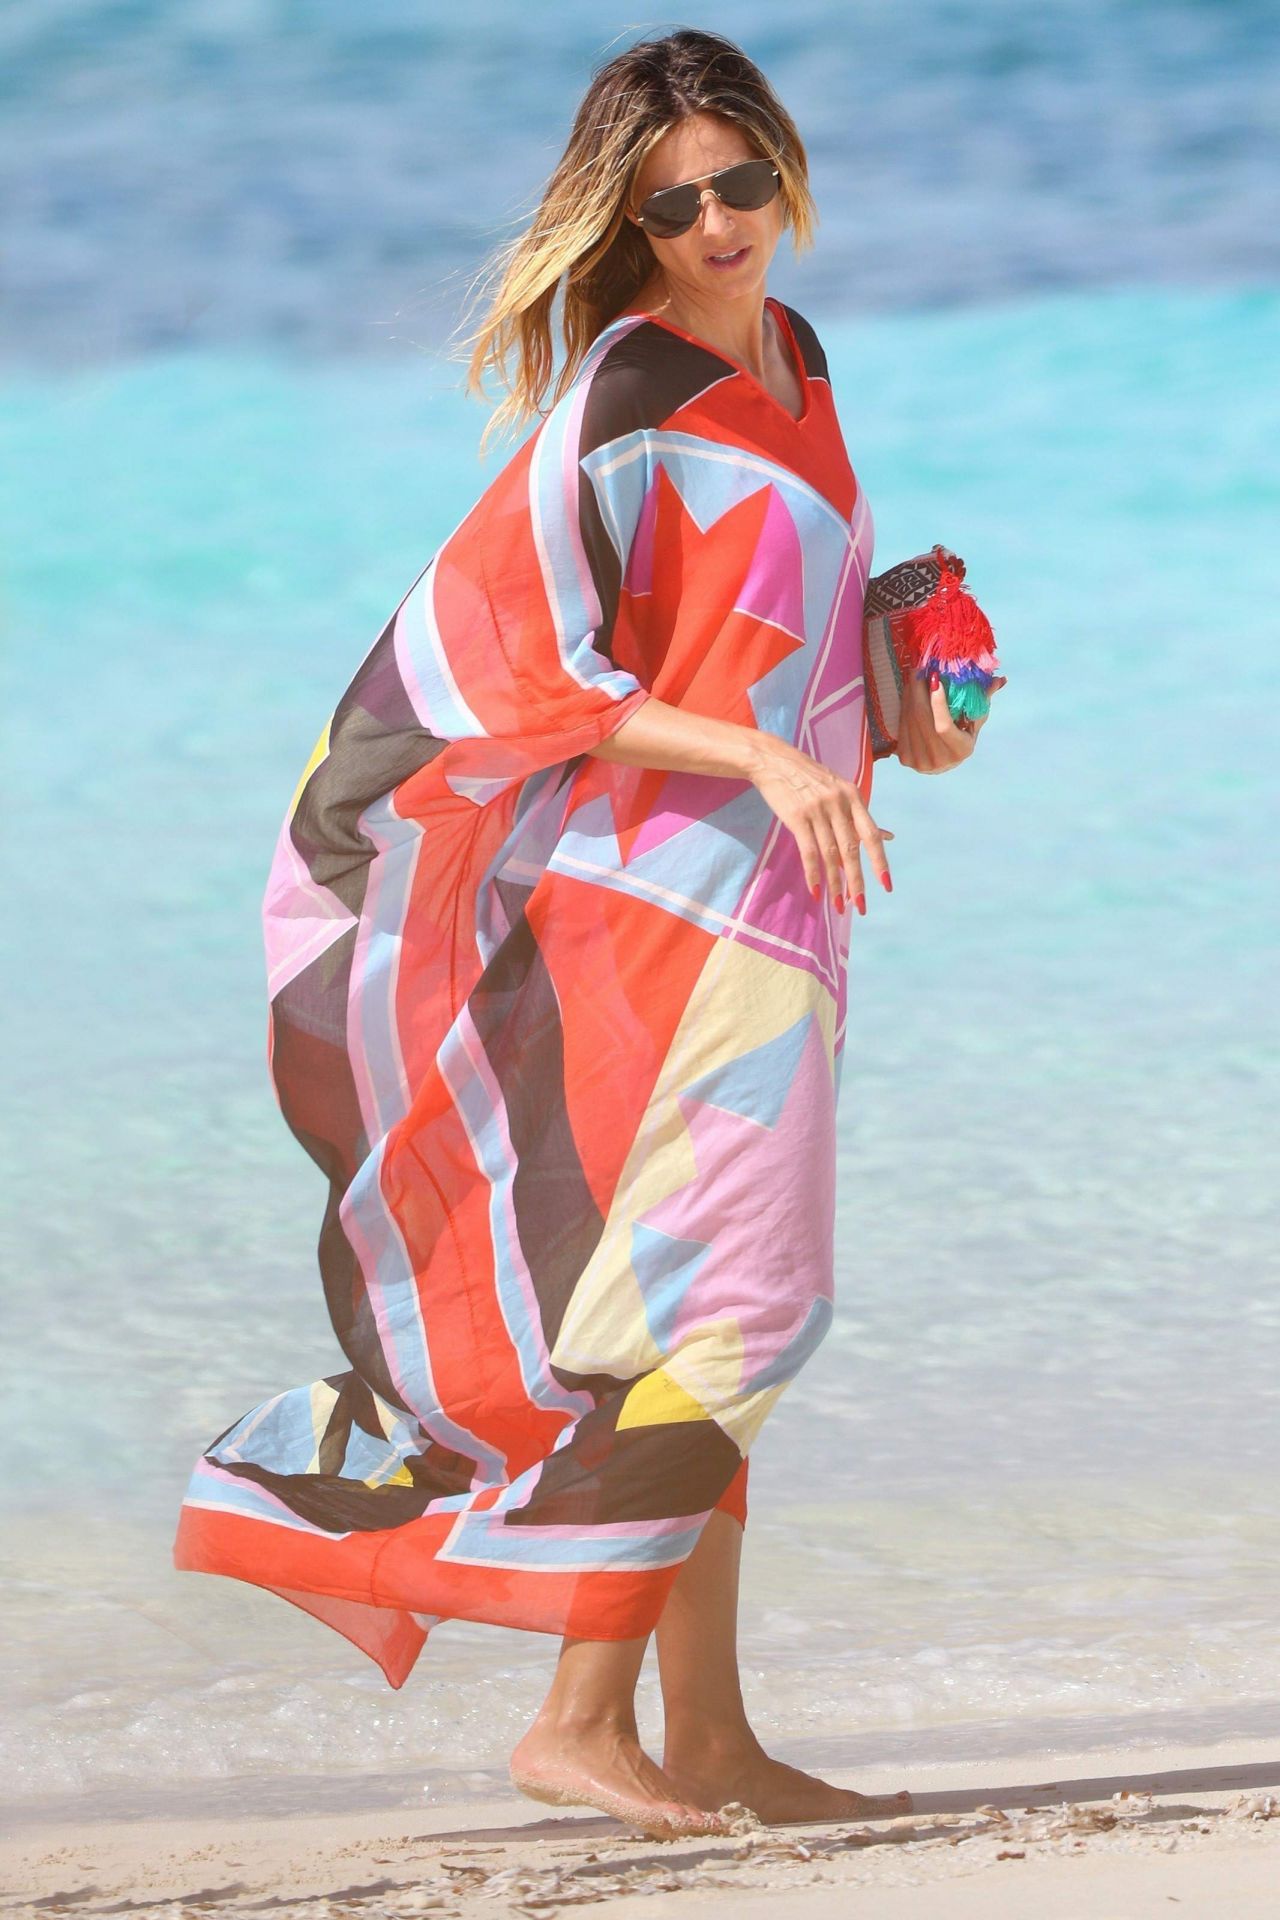 Heidi Klum In Bikini At The Beach On Turks And Caicos Islands 462017 • Celebmafia 